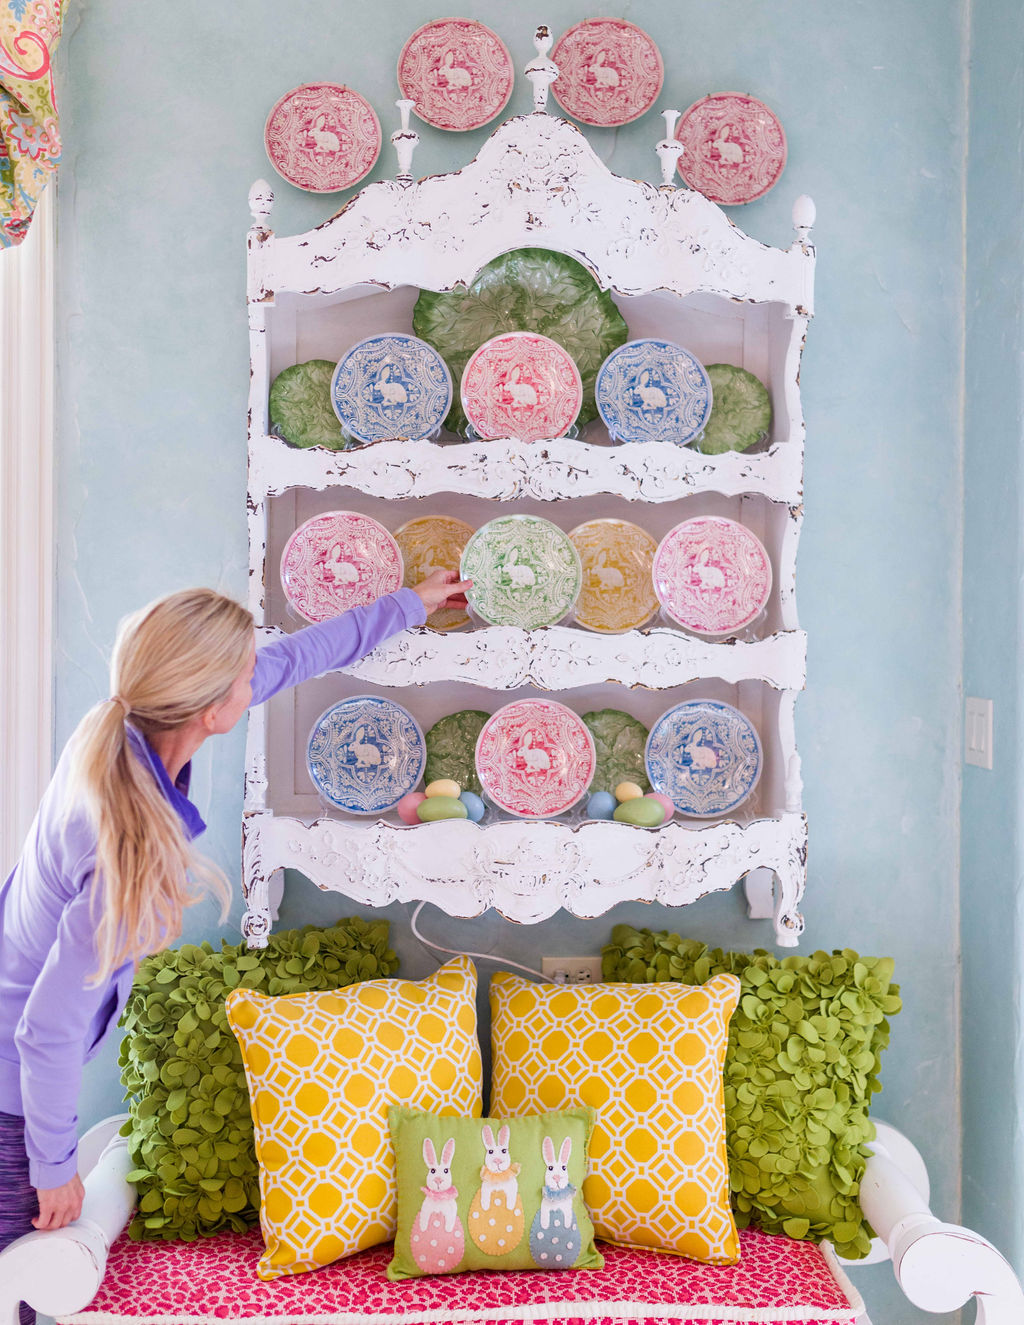 Dallas blogger Turtle Creek Lane reveals her kitchen decor for Easter